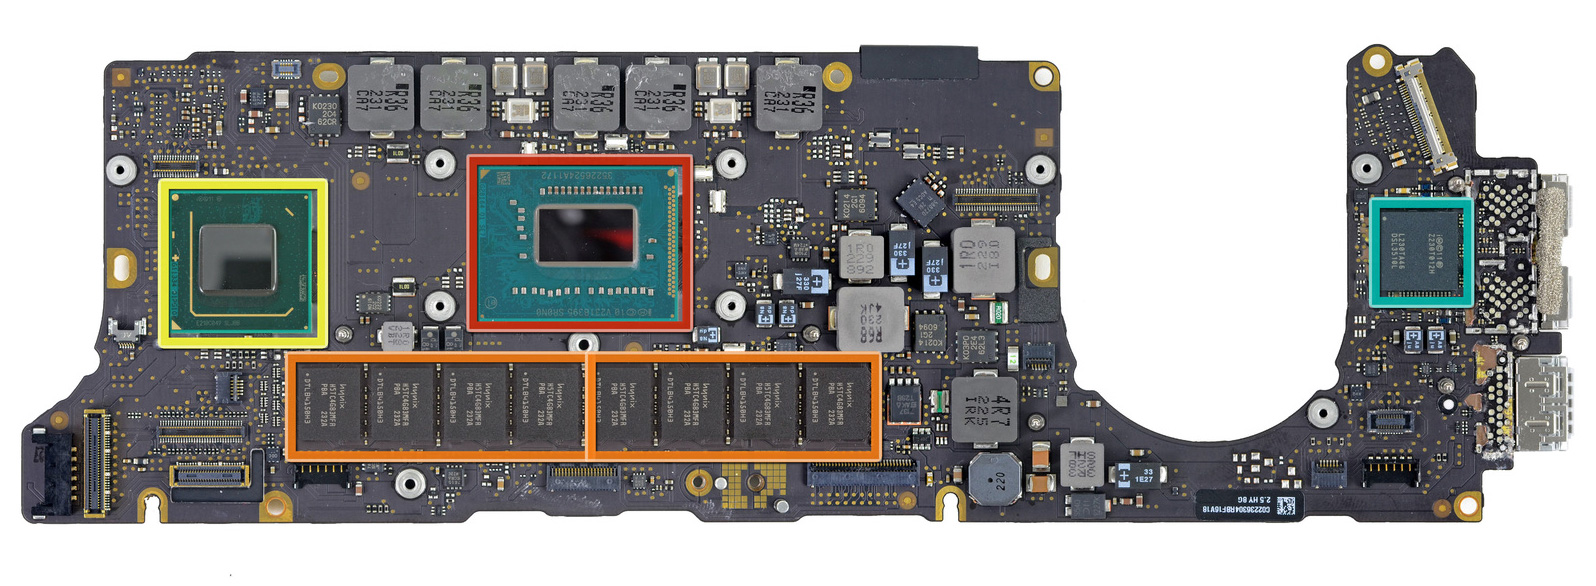 macbook pro 13 inch mid 2012 cpu upgrade ram